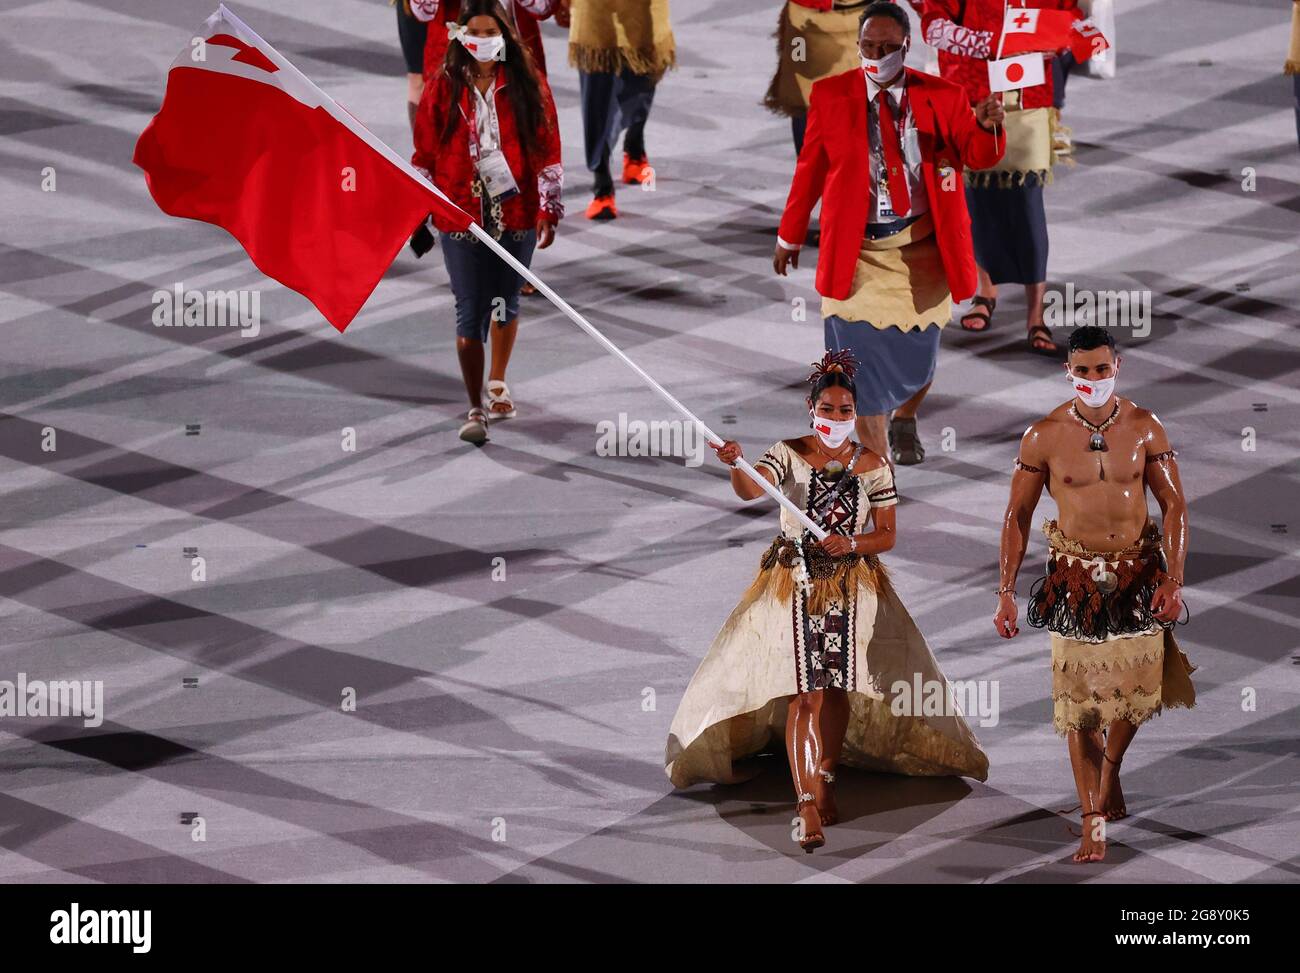 Tokyo 2020 Olympics - The Tokyo 2020 Olympics Opening Ceremony - Olympic  Stadium, Tokyo, Japan - July 23, 2021. Flag bearer Malia Paseka of Tonga  and PitaTaufatofua of Tonga lead their contingent